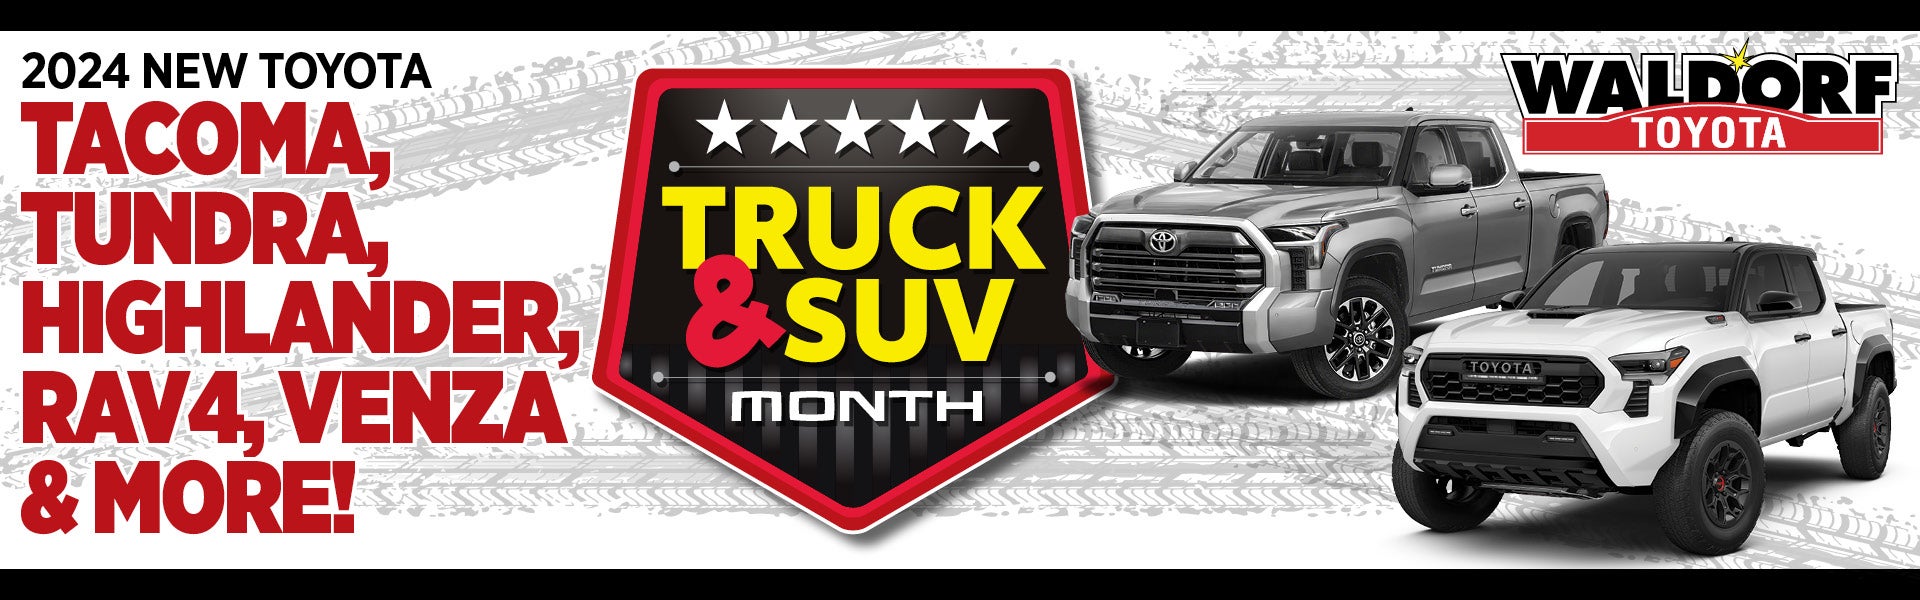 Truck & SUV Month!